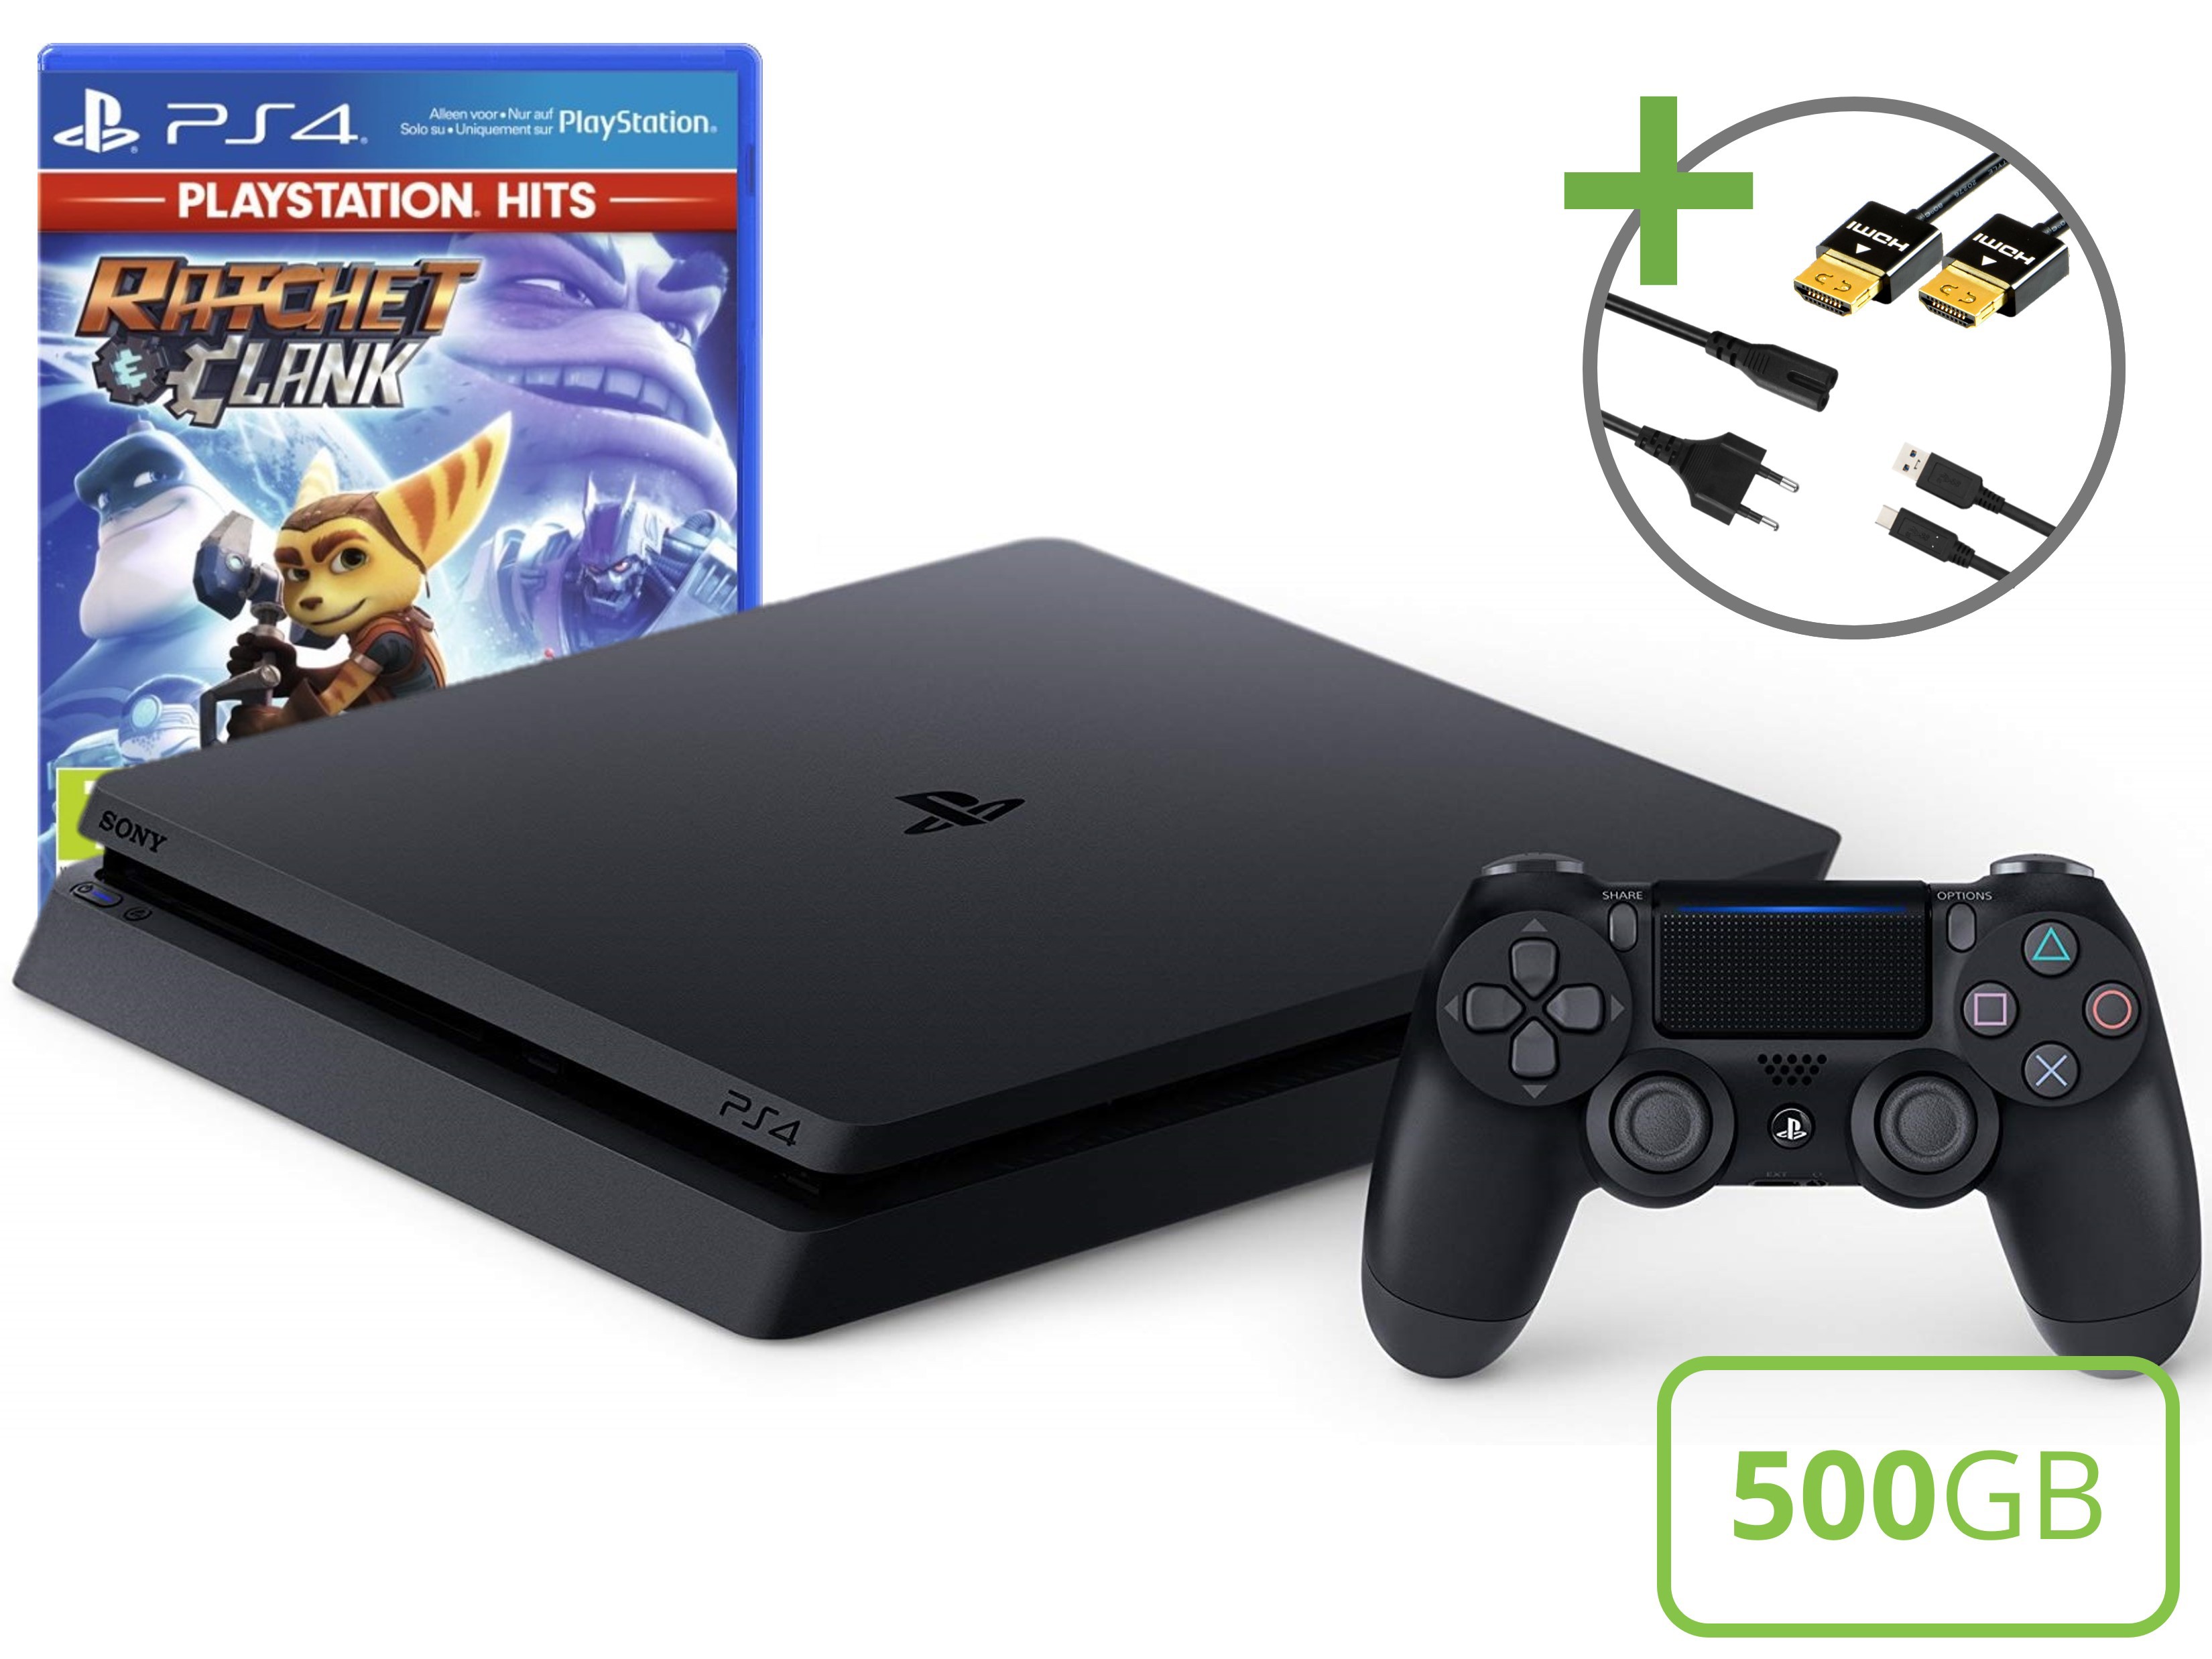 Sony PlayStation 4 Slim Starter Pack - 500GB Ratchet & Clank Edition - Playstation 4 Hardware